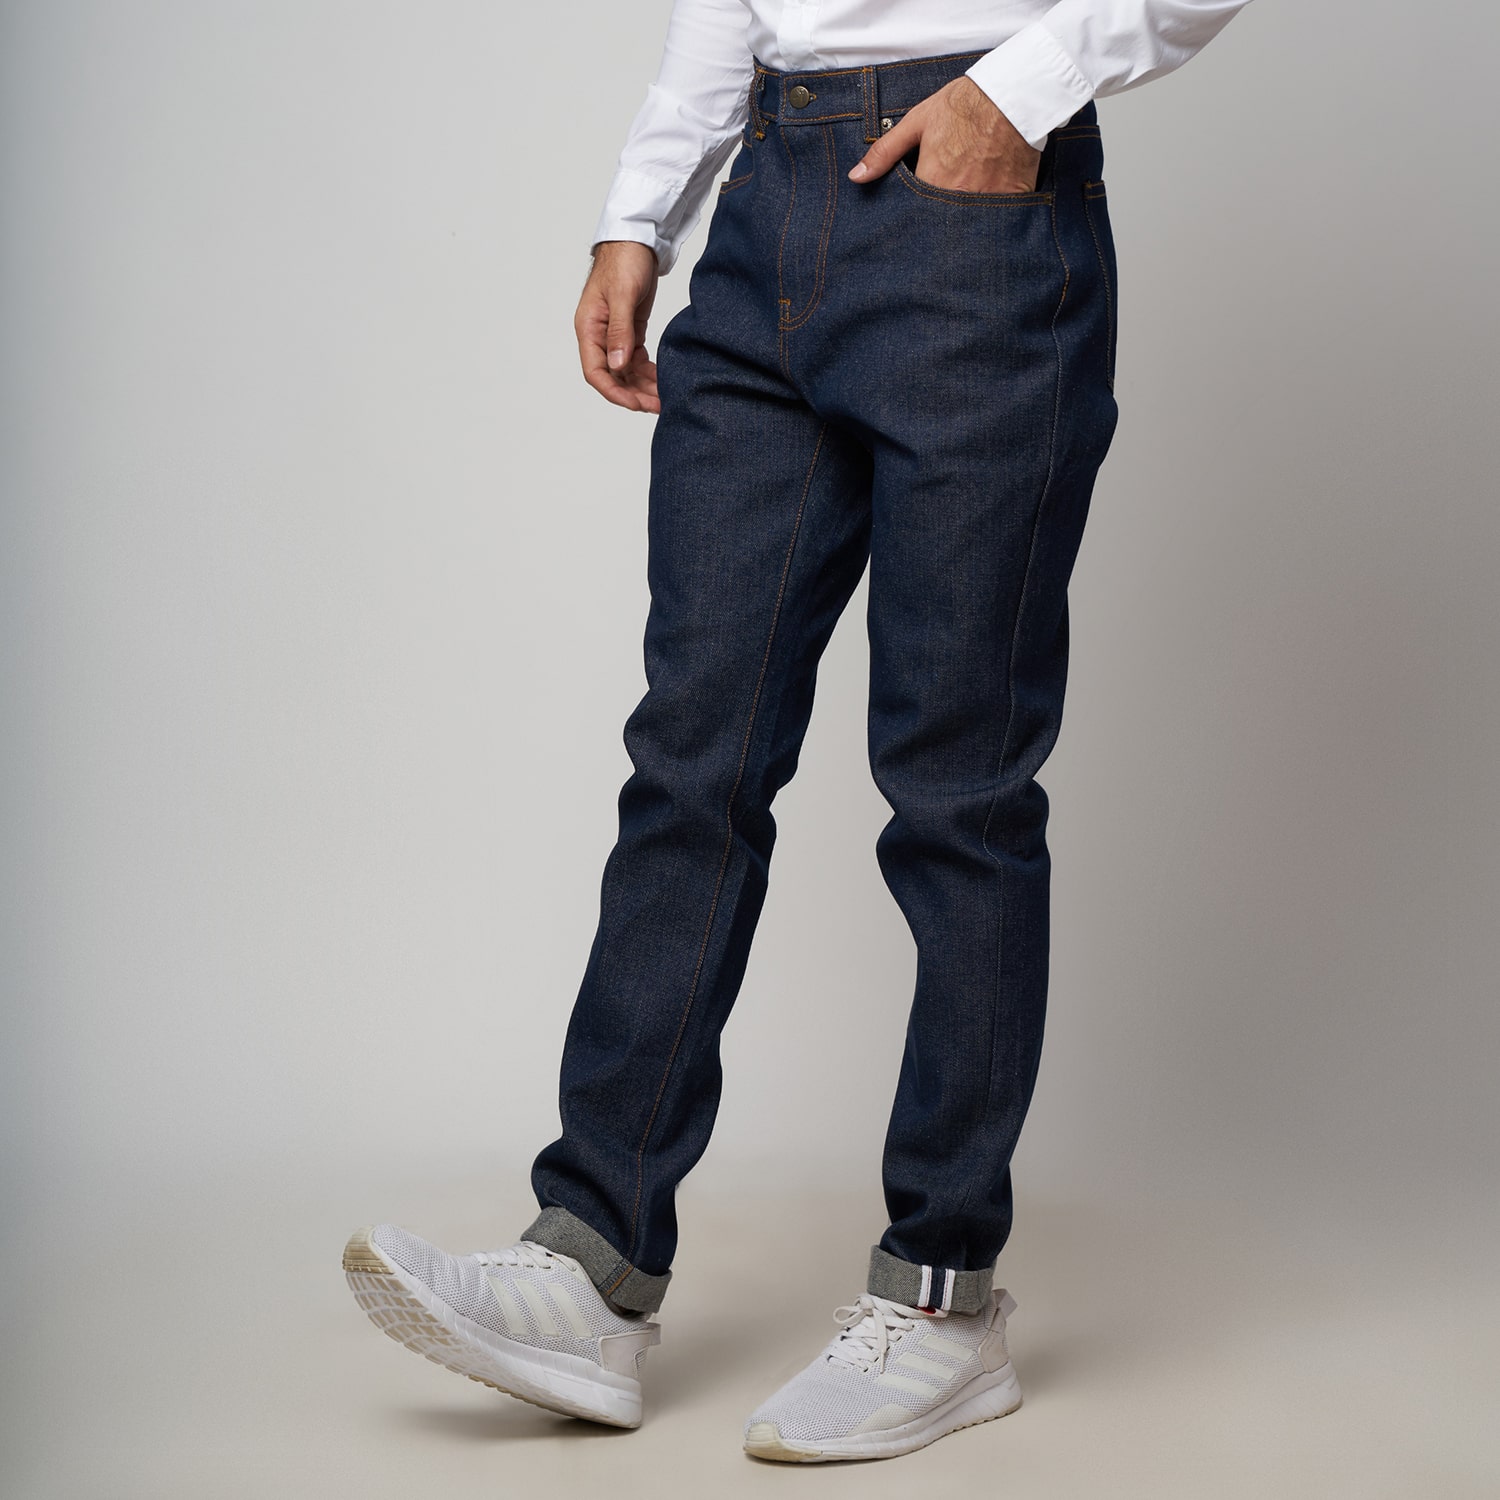 Atlantic Selvedge Accent Denim 14oz Blue Indigo - DEER Jeans